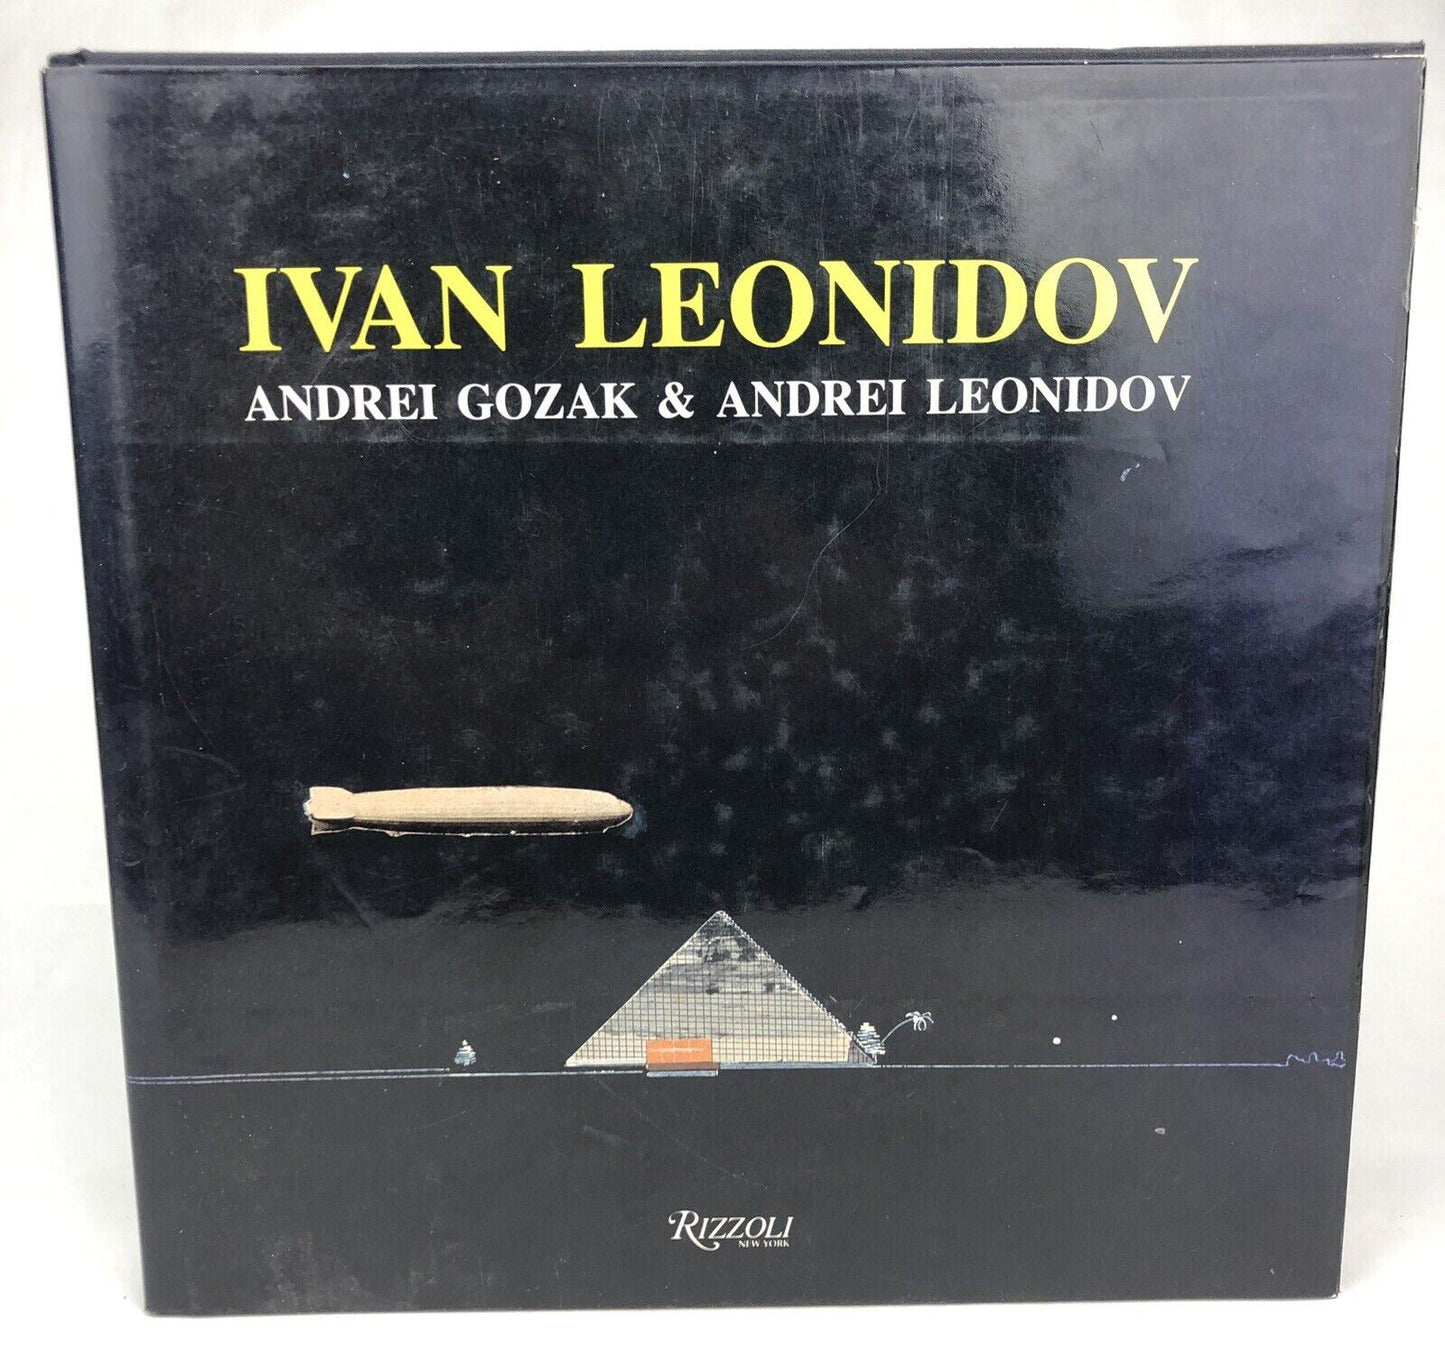 IVAN LEONIDOV The Complete Works RIZZOLI 1988 ANDREI GOZAK Avant Garde Architect